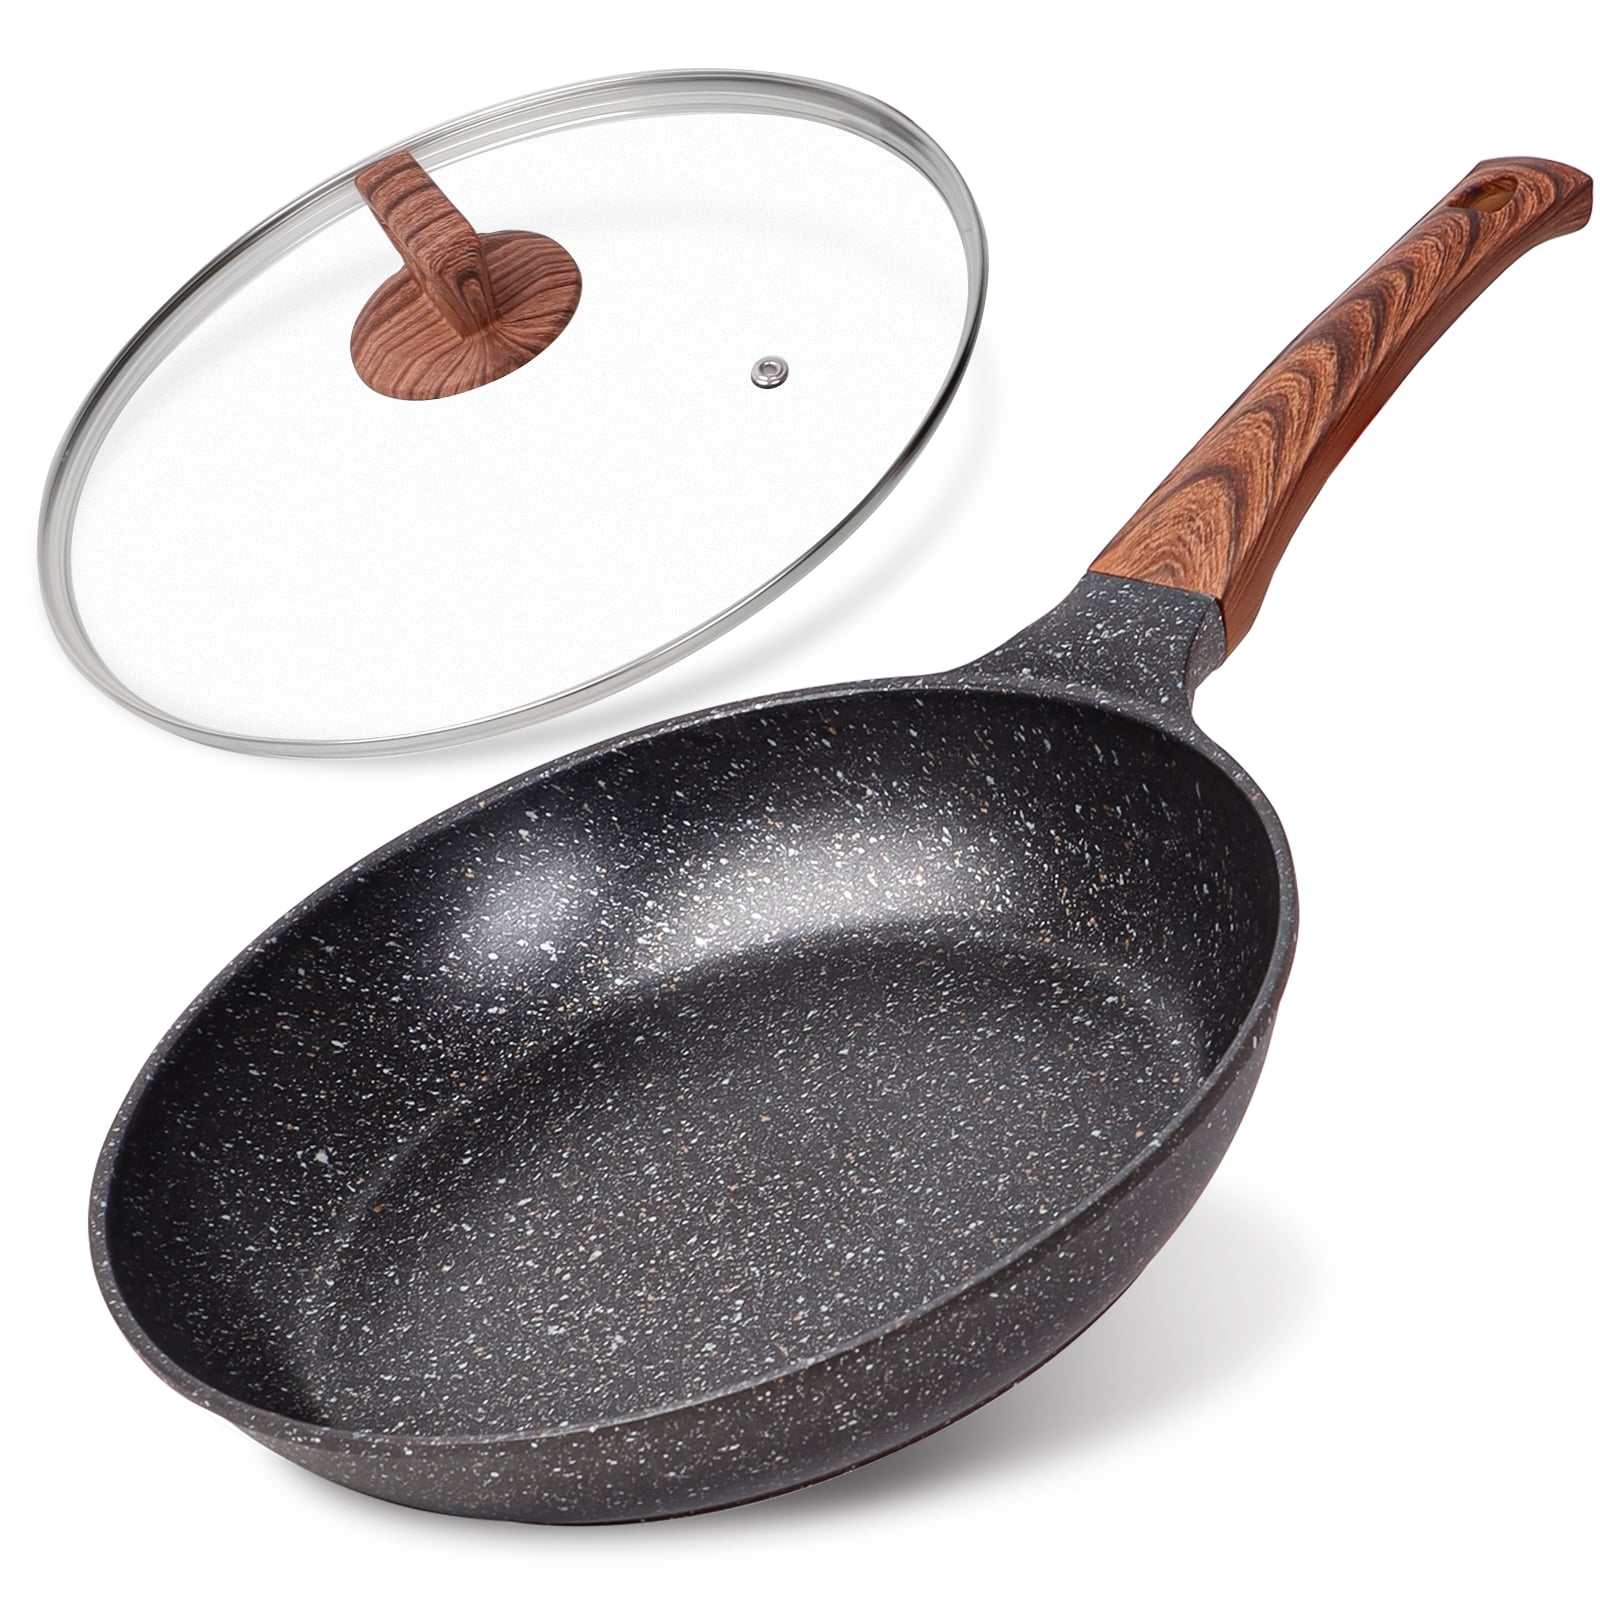 Caannasweis Nonstick Pan, Ceramic Nonstick Frying Pan, Best